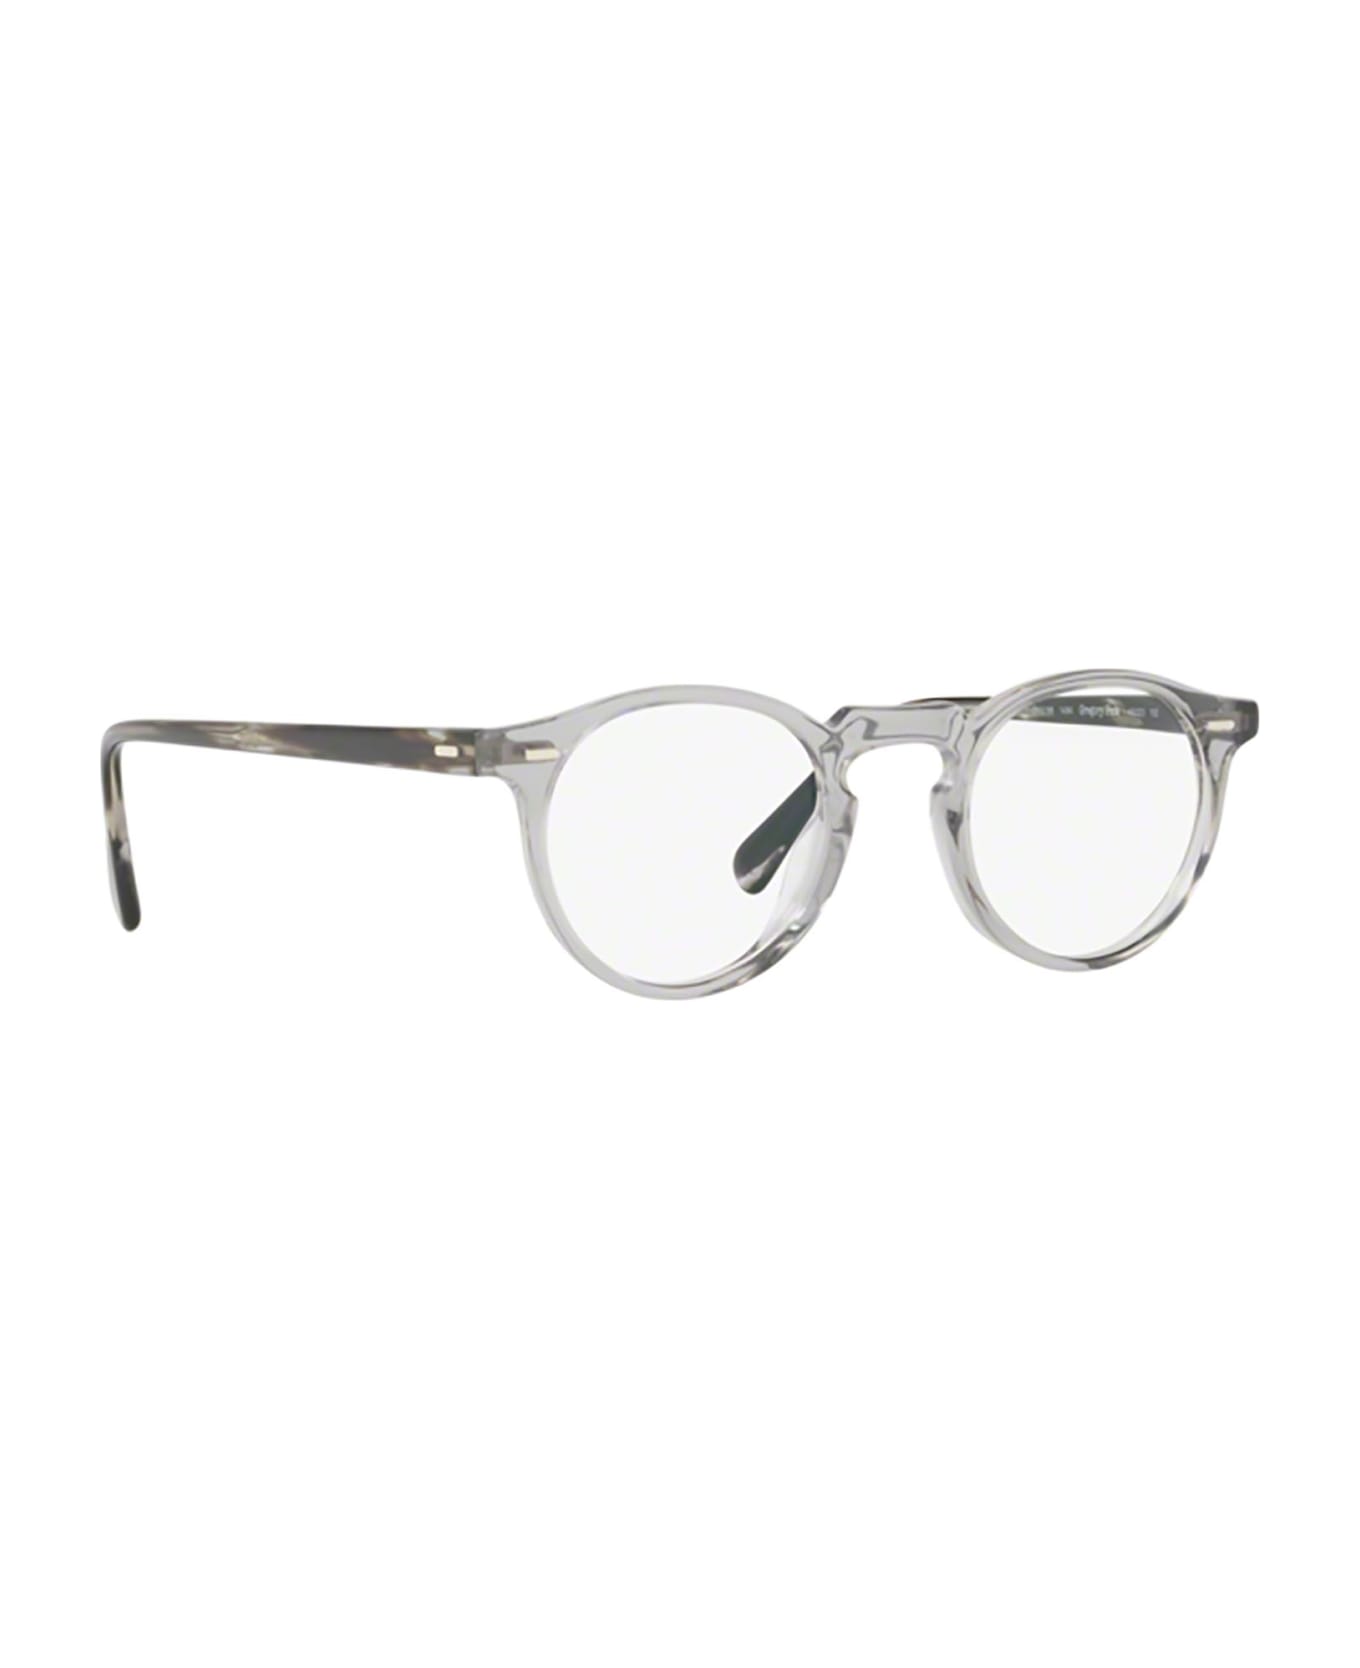 Oliver Peoples Ov5186 Workman Grey Glasses - Workman Grey アイウェア